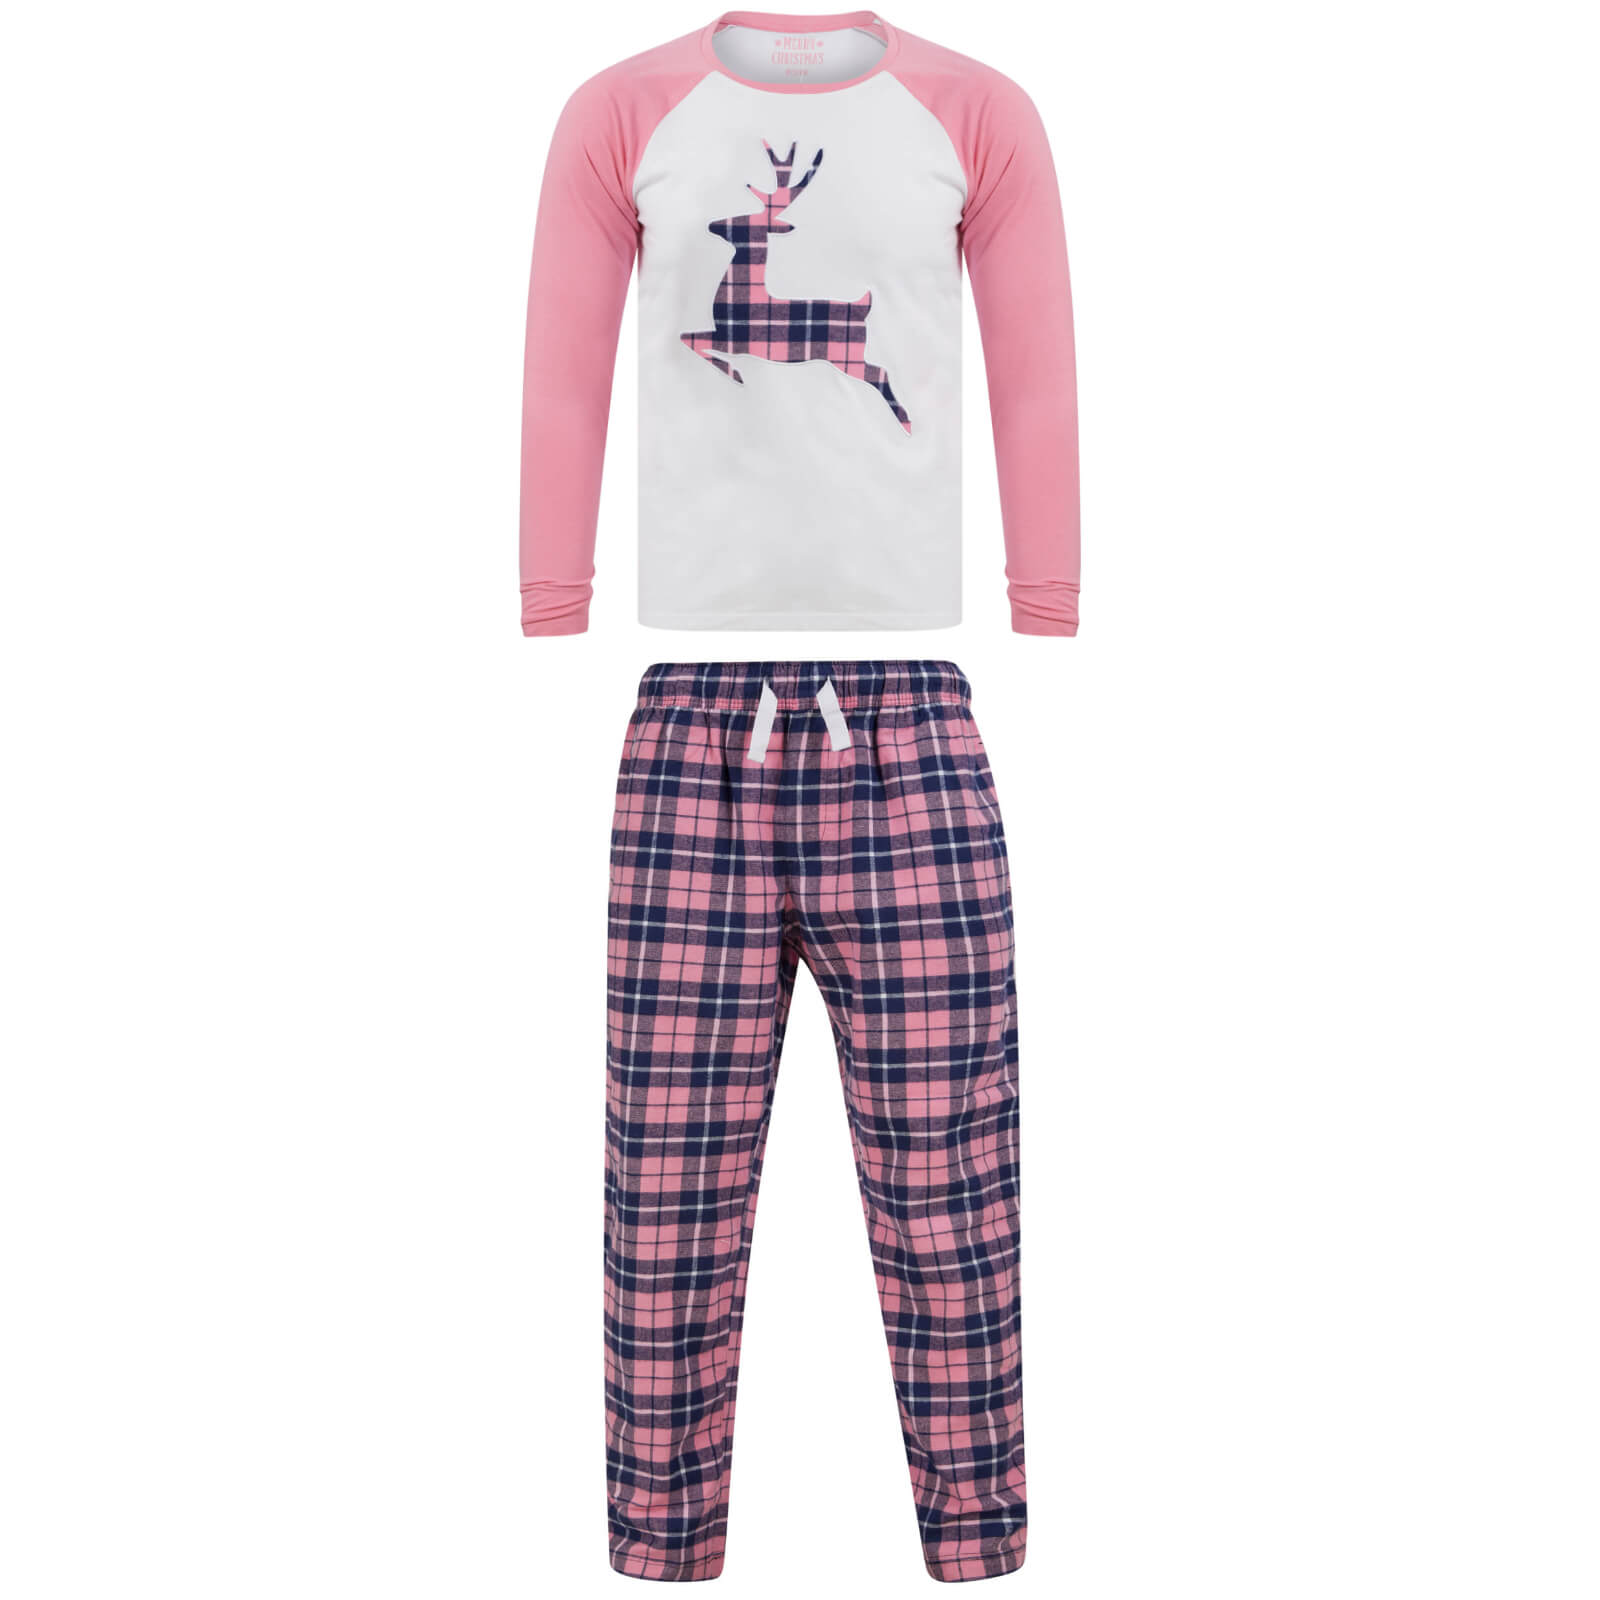 Mr Crimbo Womens Christmas Pyjama Set Reindeer/Stag Check Bottoms - MrCrimbo.co.uk -SRG3Q17468_E - Pink/Navy -Black